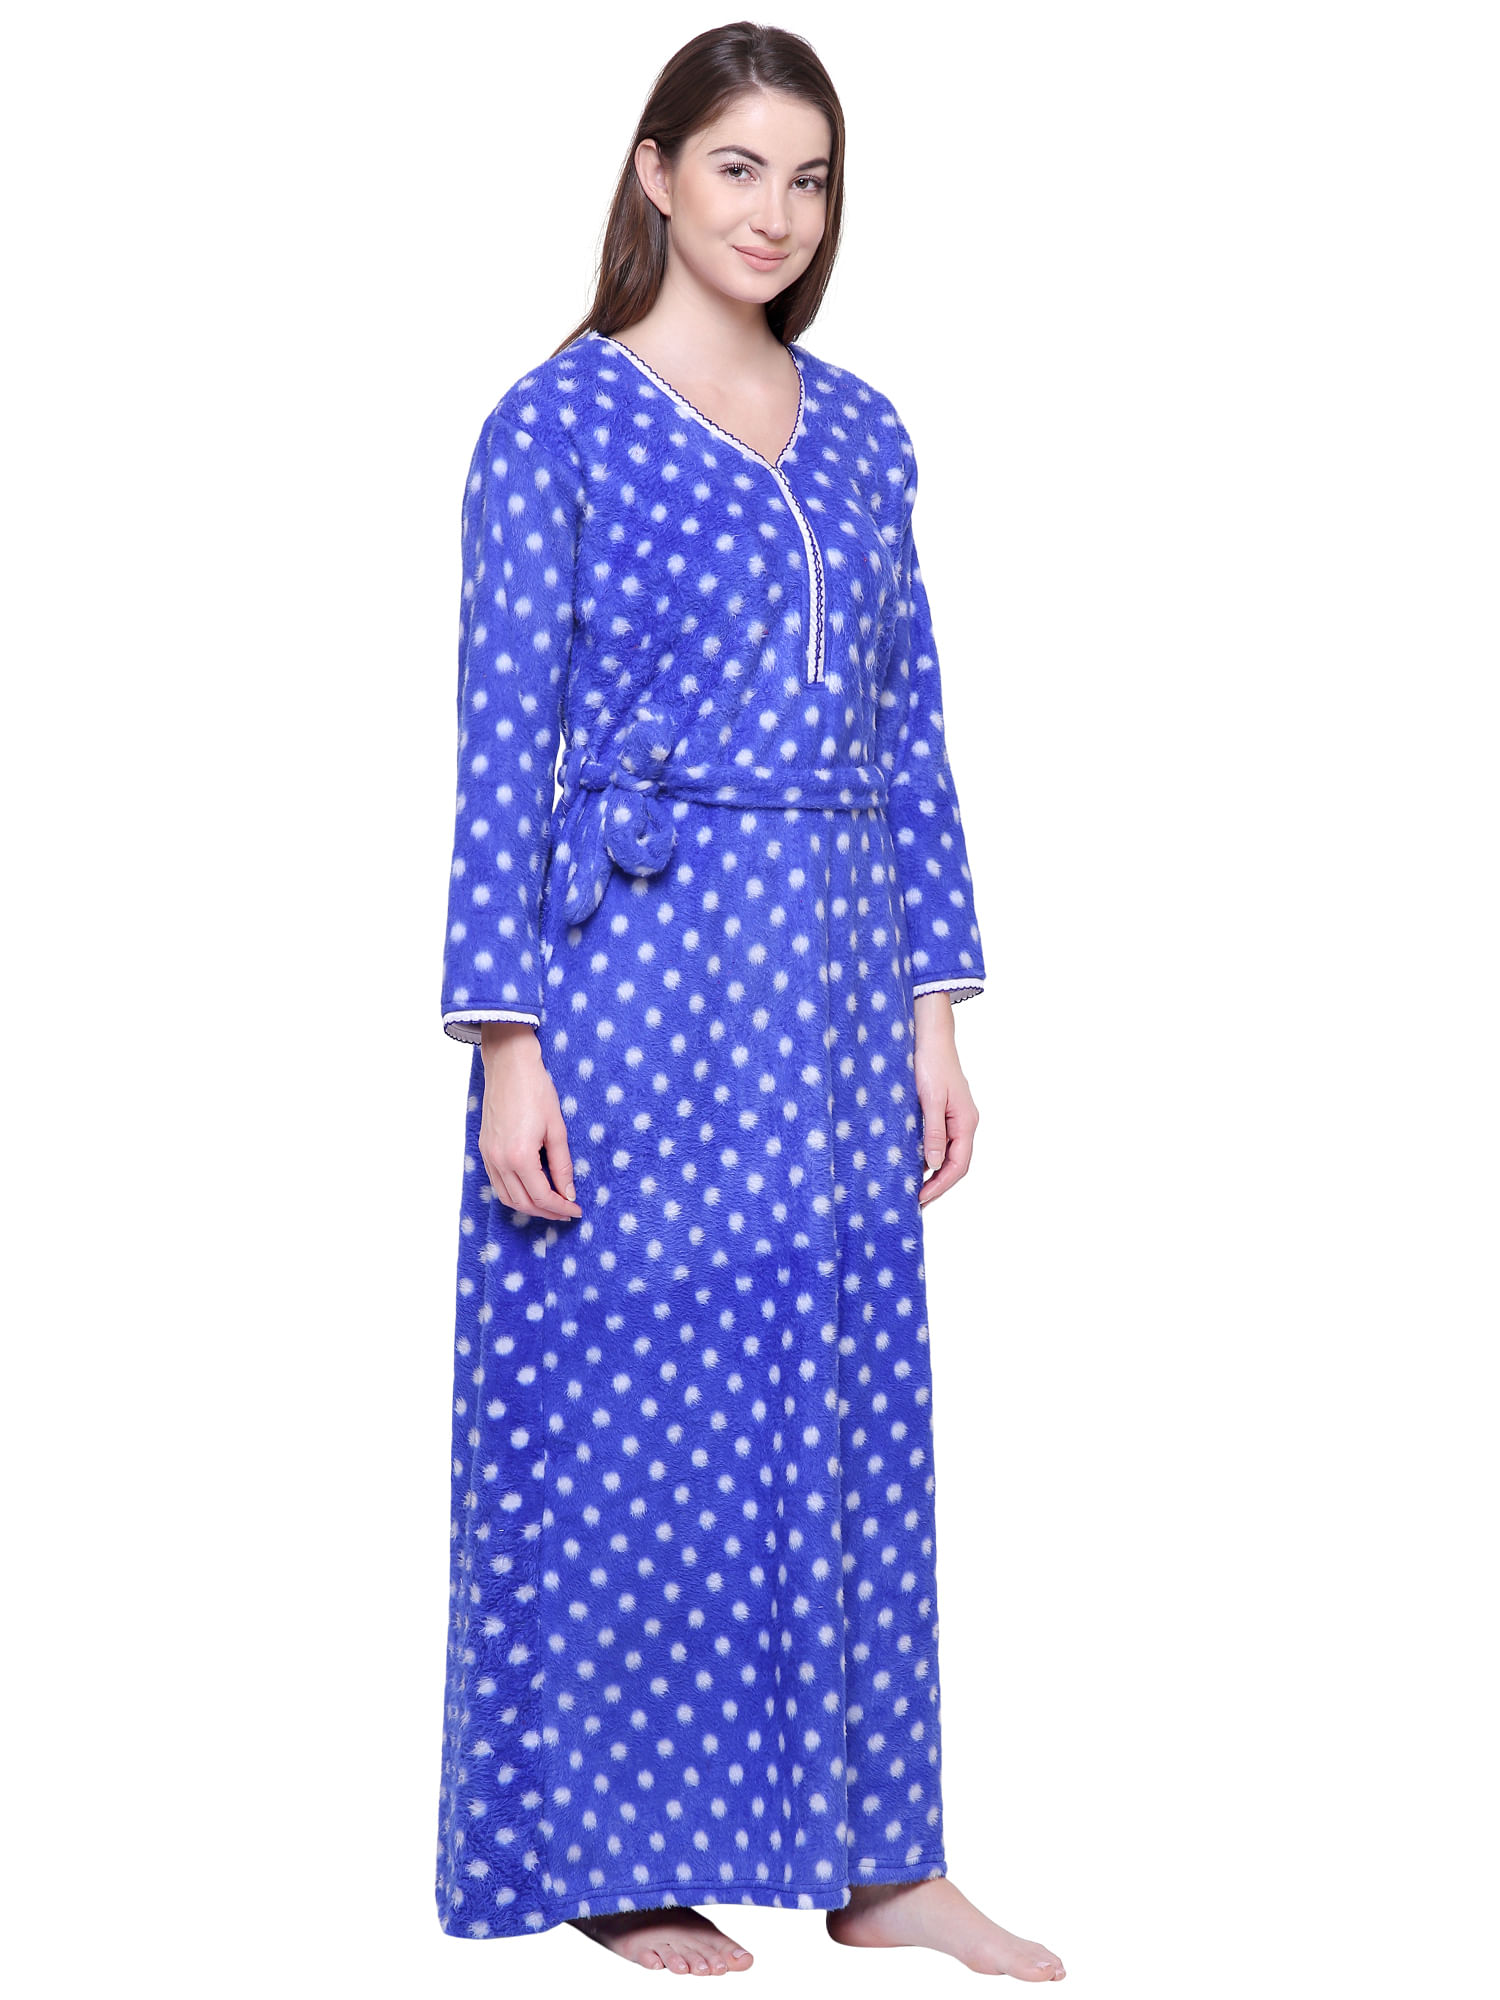 Short Night Dress - Buy Short Night Dress online in India | Zivame